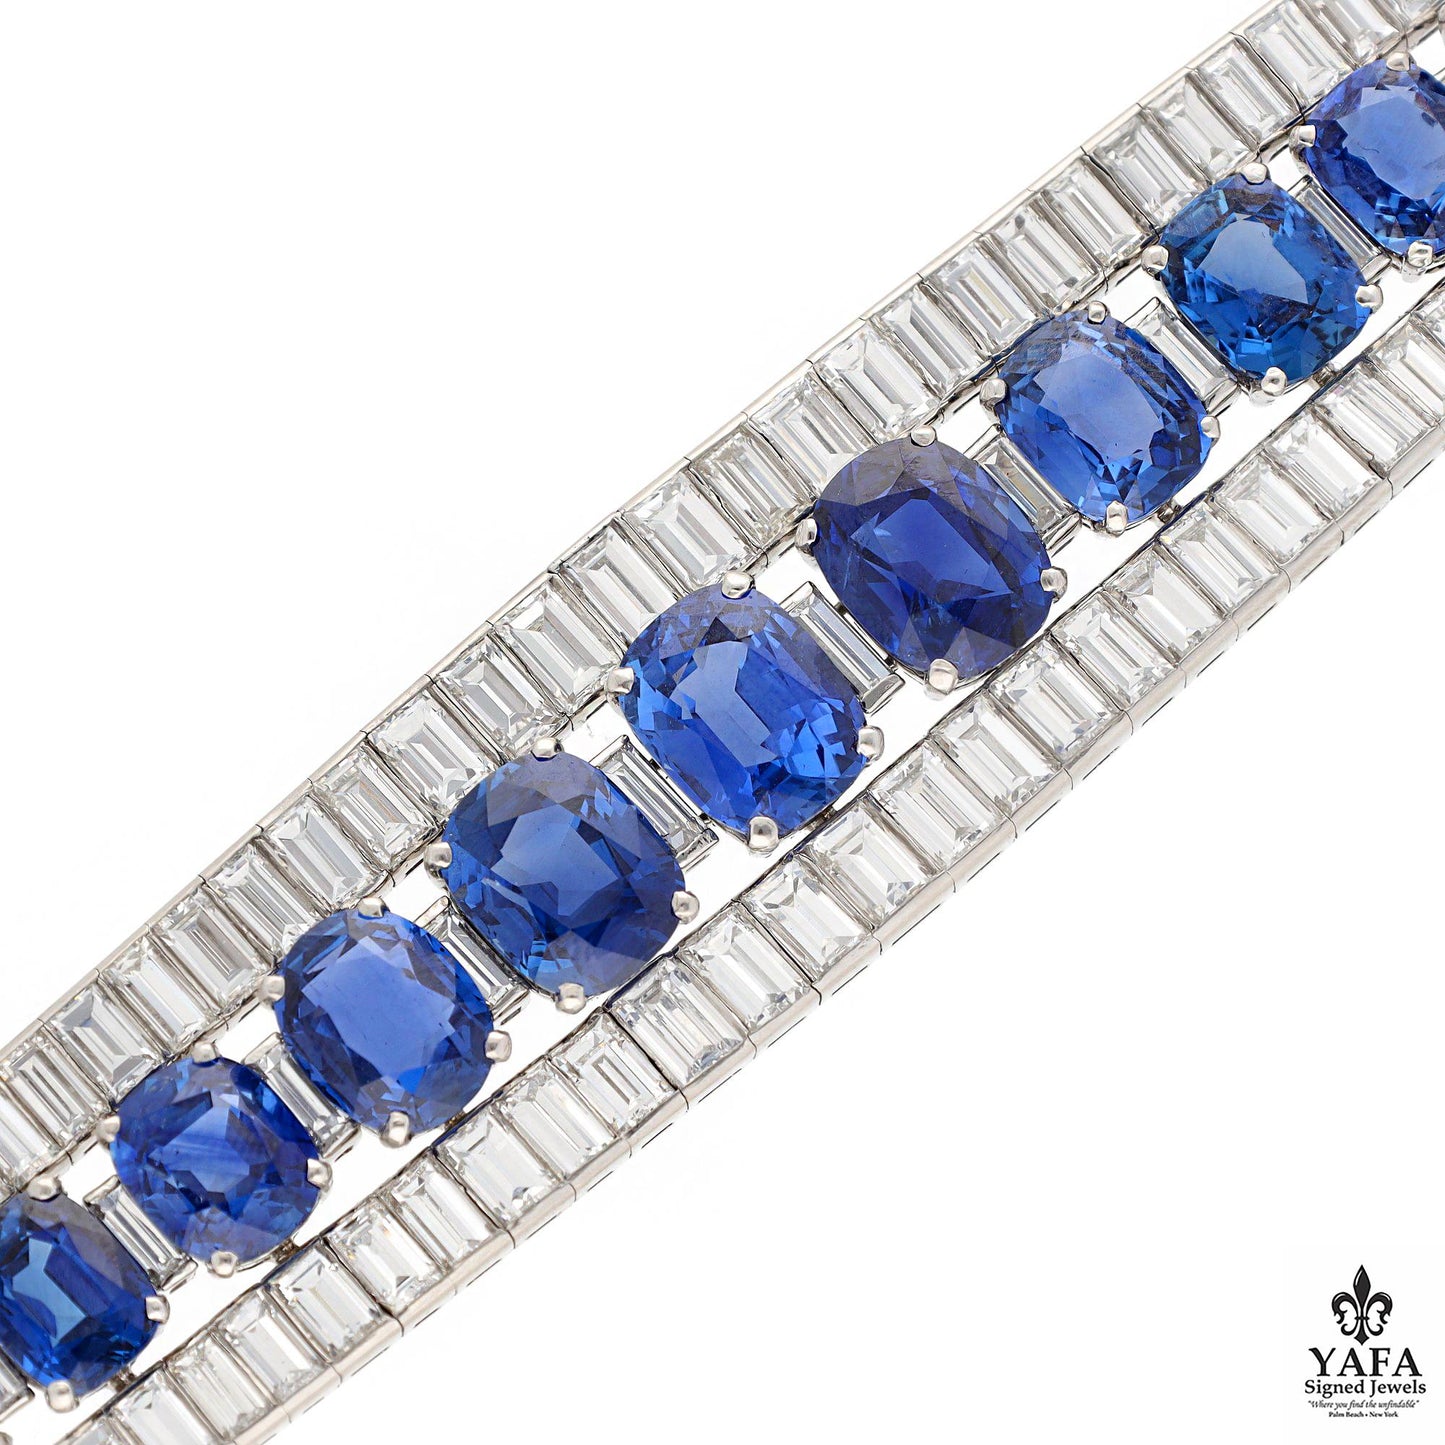 Van Cleef & Arpels Oval Sapphires and Baguette Diamond Bracelet Circa - 1938